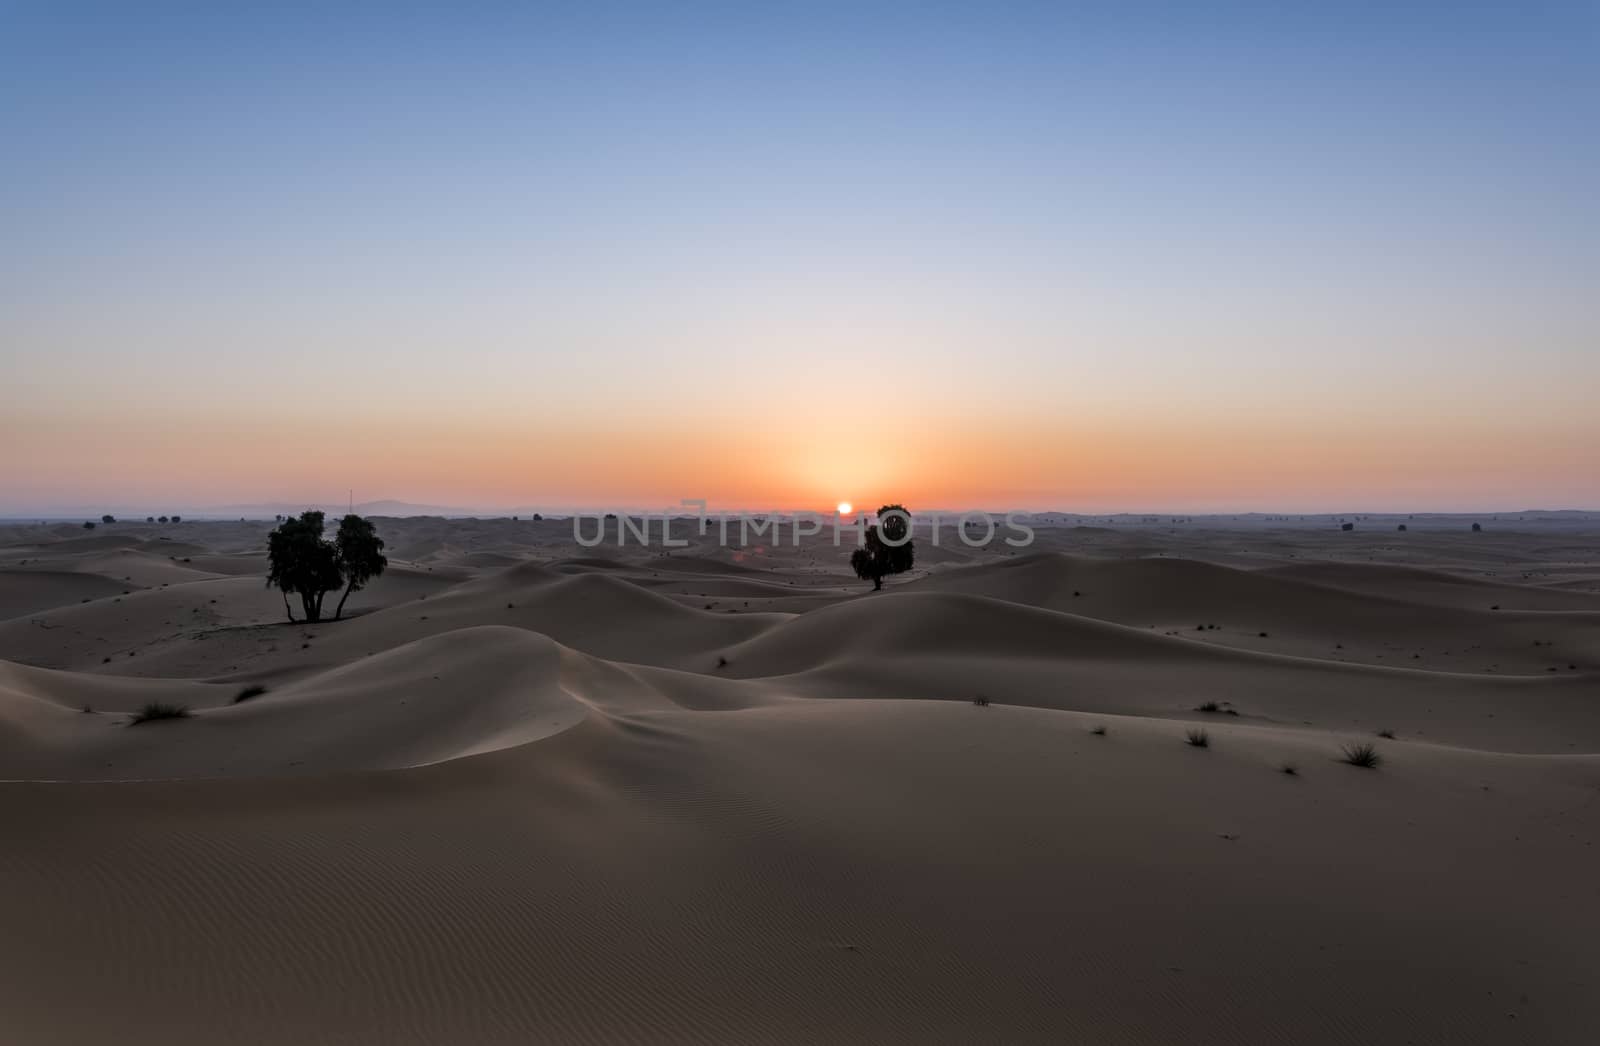 Sunrise aboves an ocean of sand dunes by GABIS